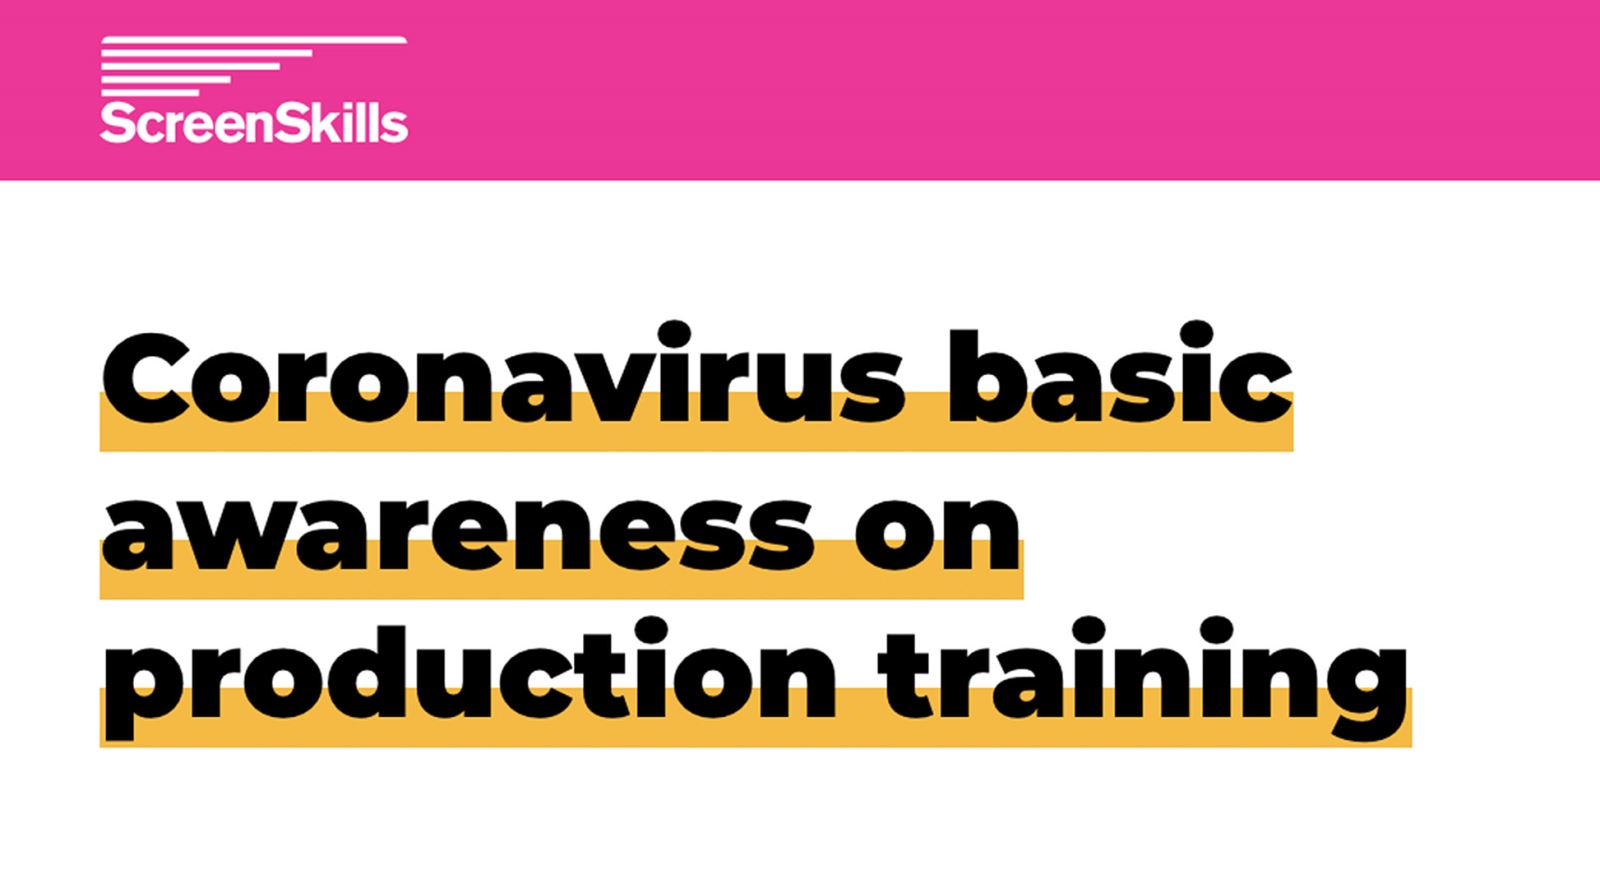 Coronavirus basic awareness on production training